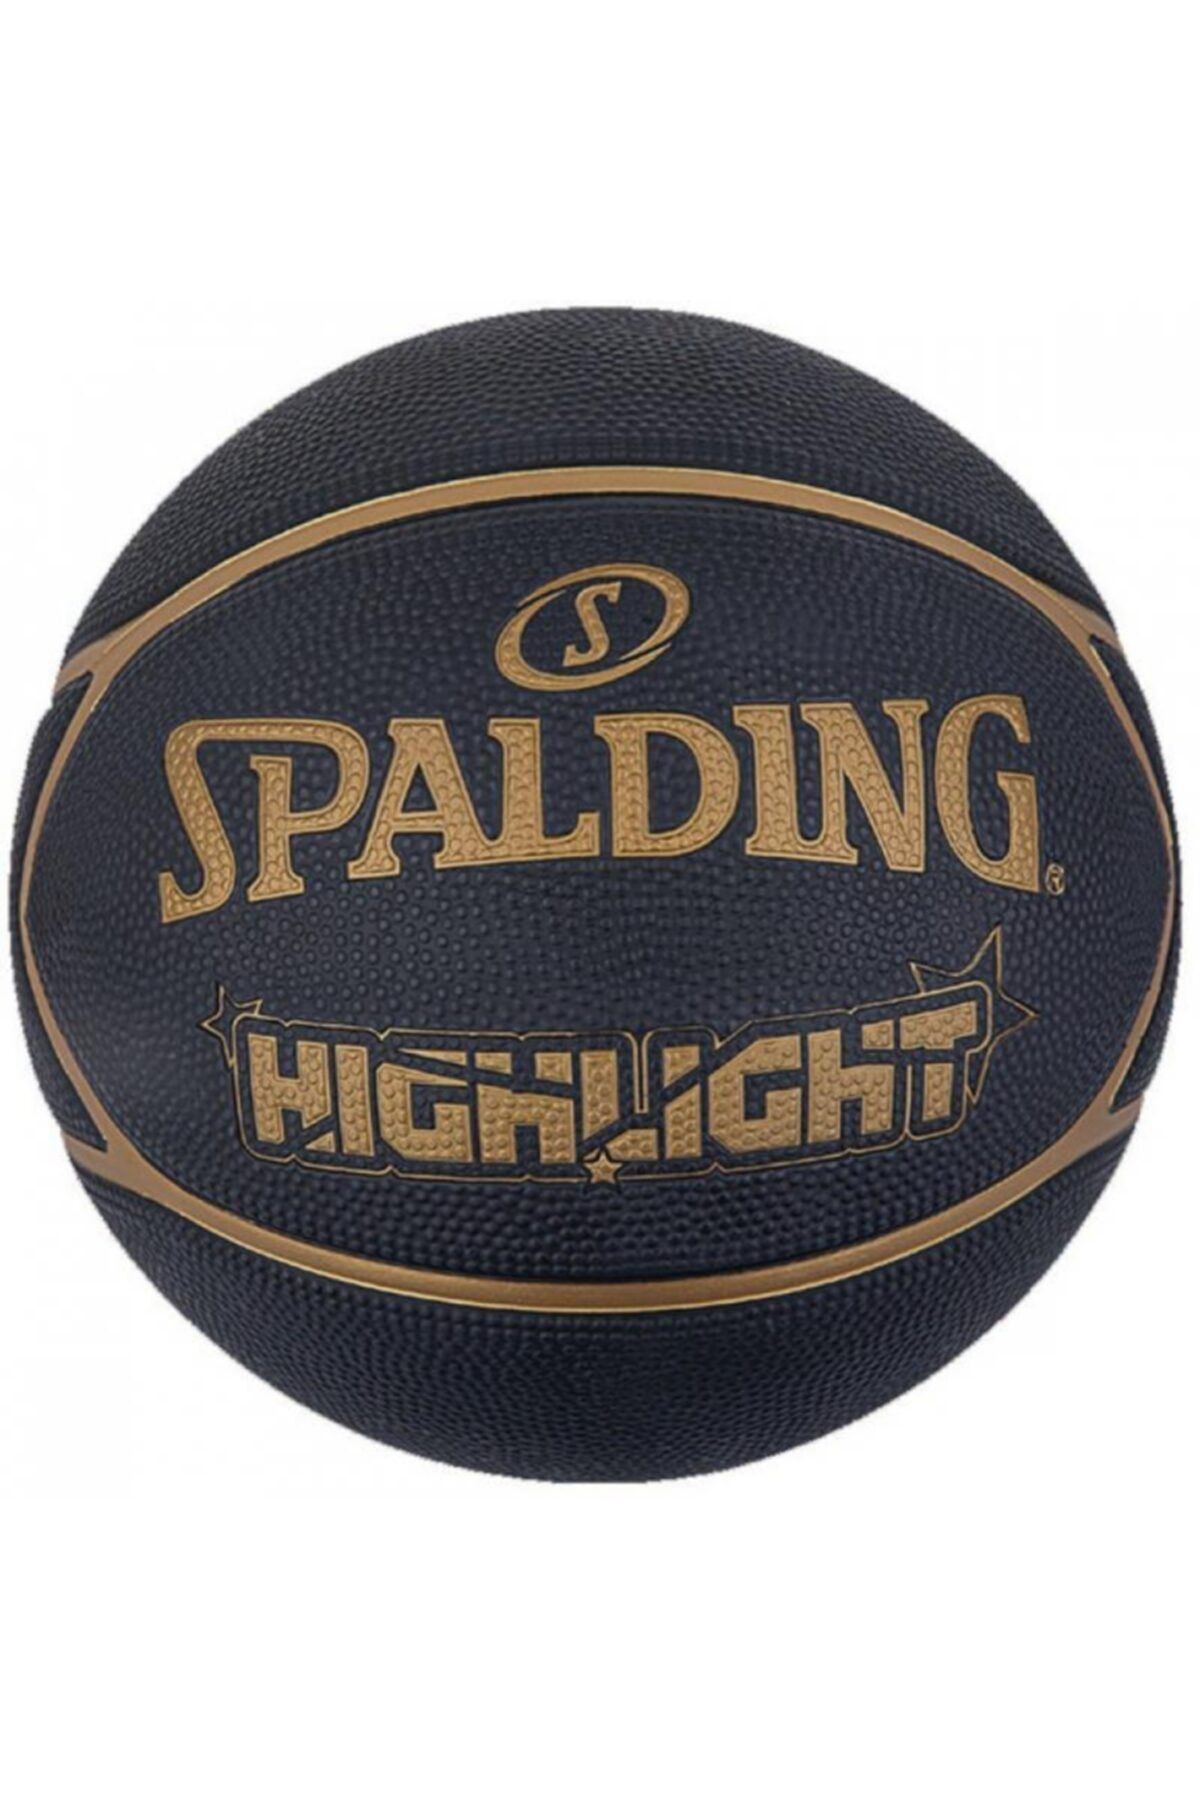 Spalding Basket Topu 2021 Highlight Black Gold Size :7 Rub (84355z)